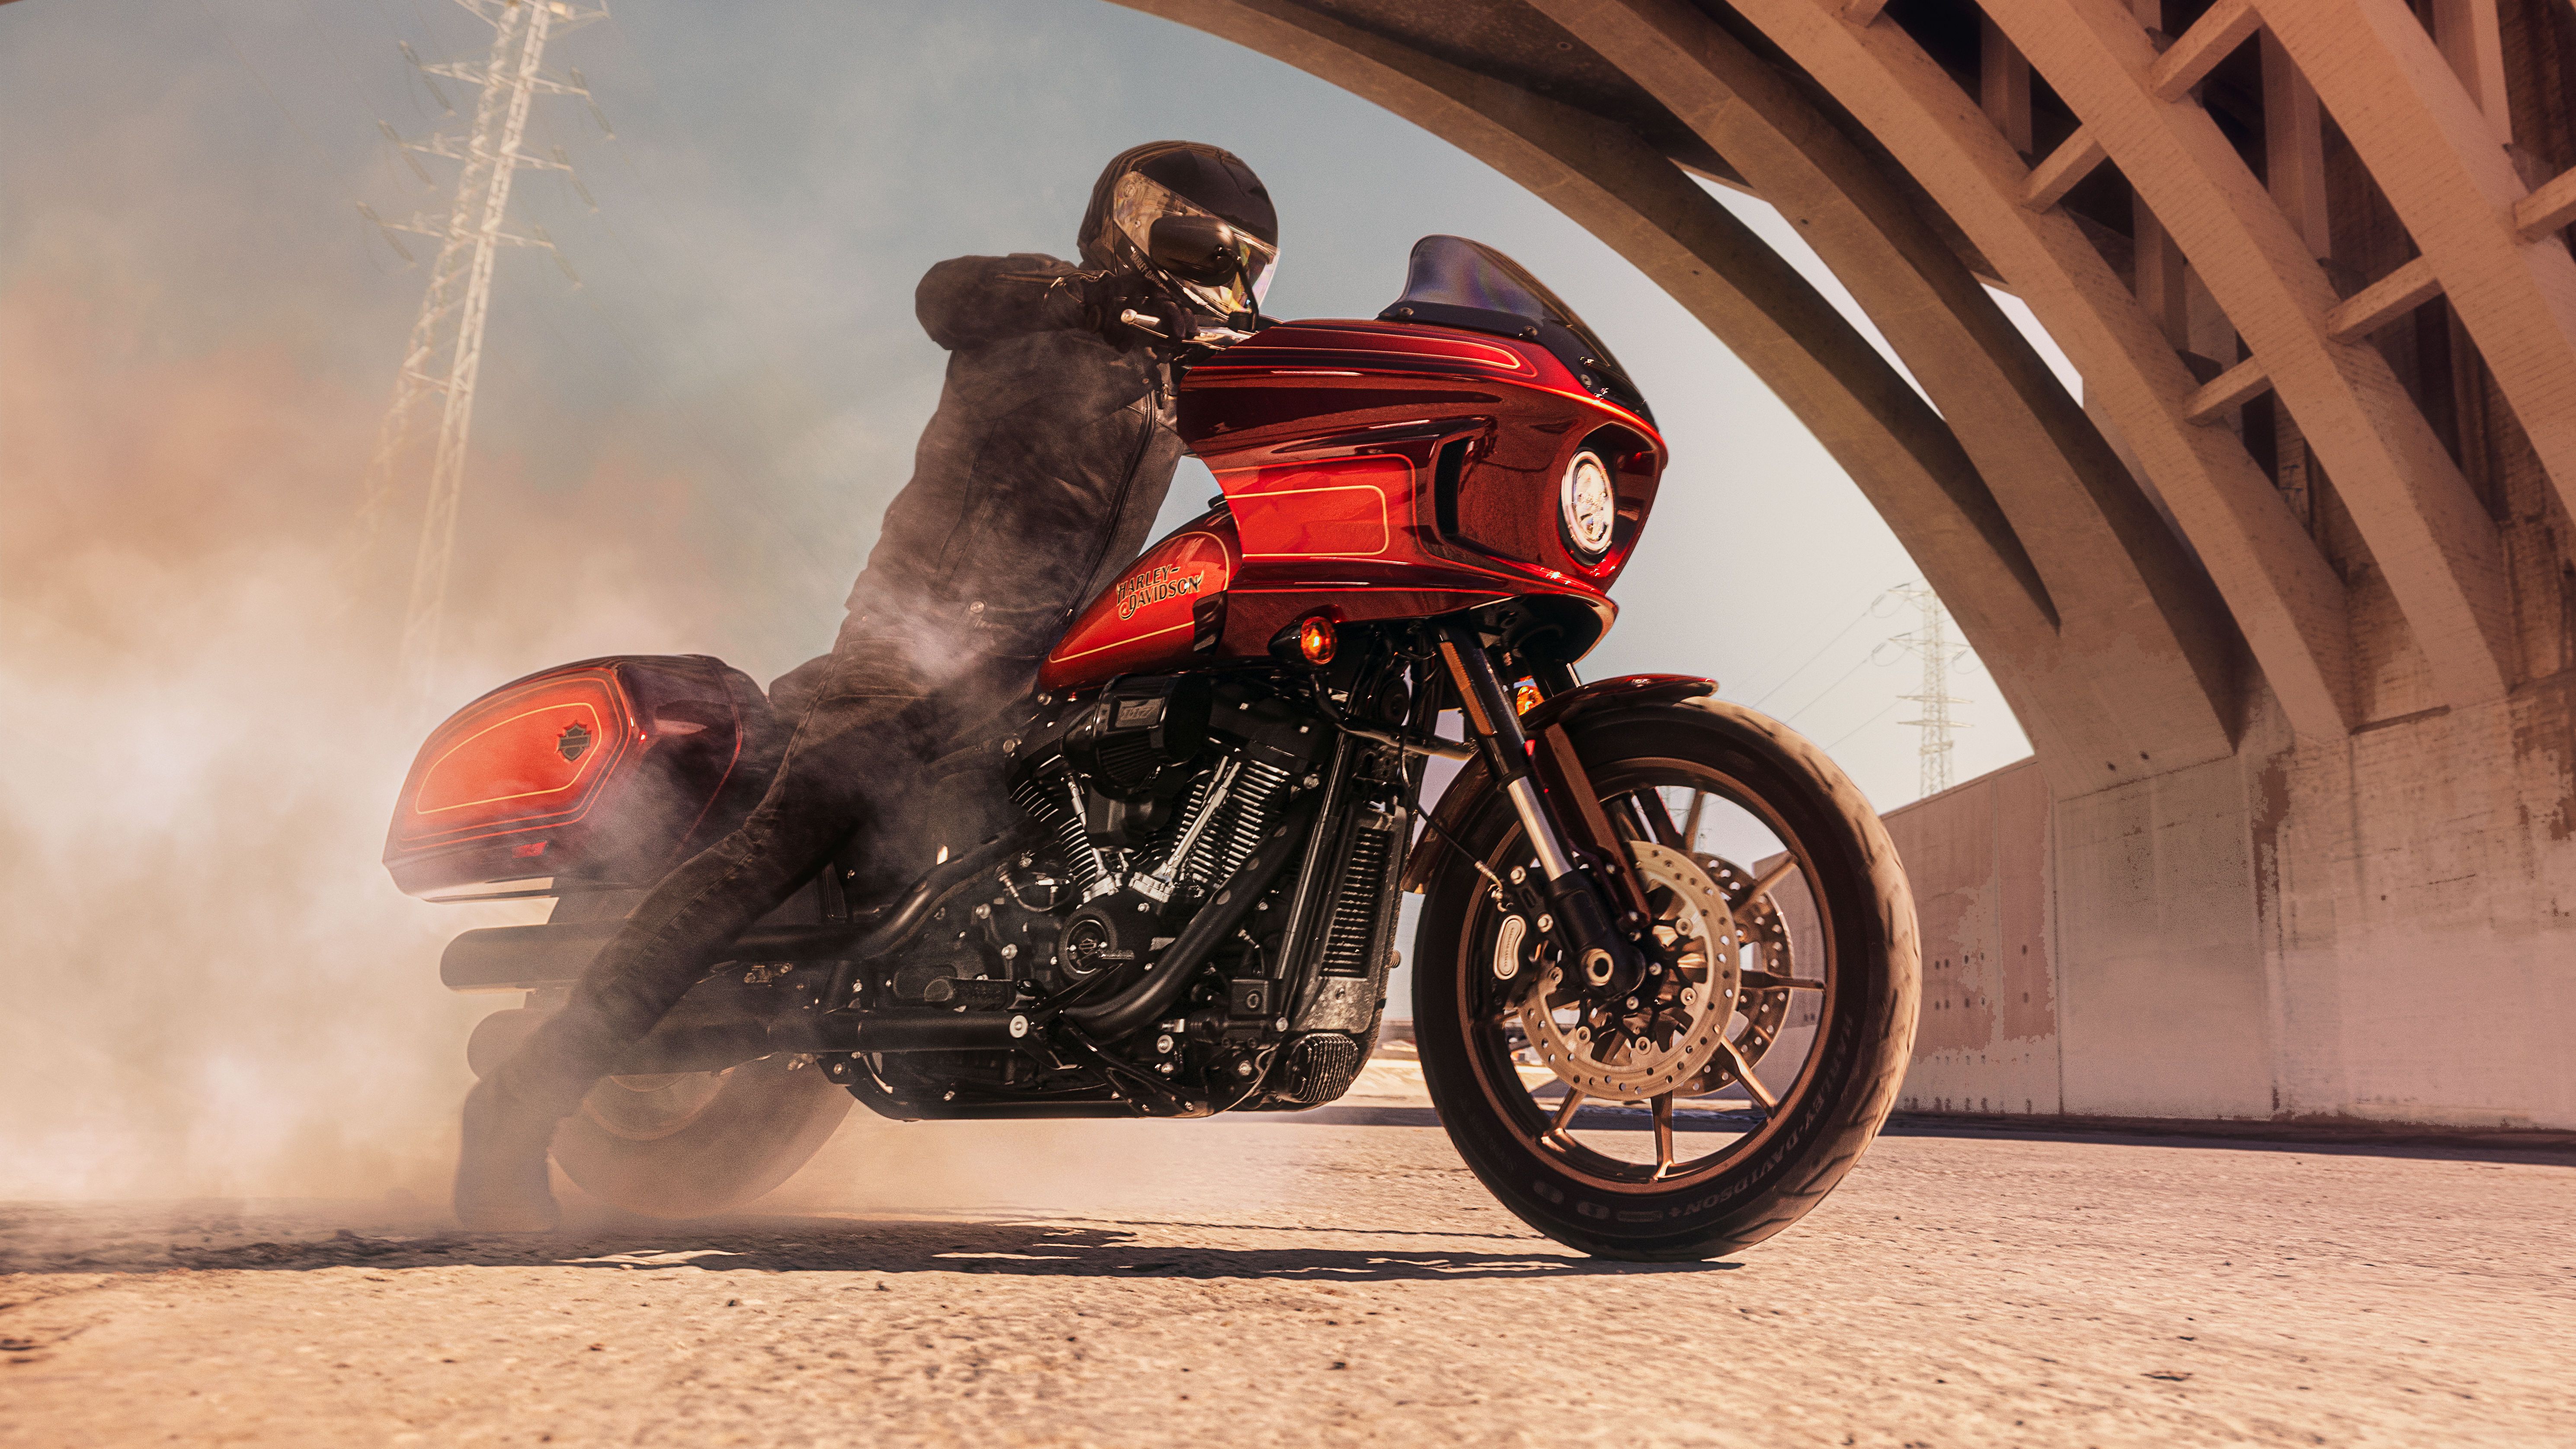 2022 Harley-Davidson Low Rider El Diablo doing a burnout